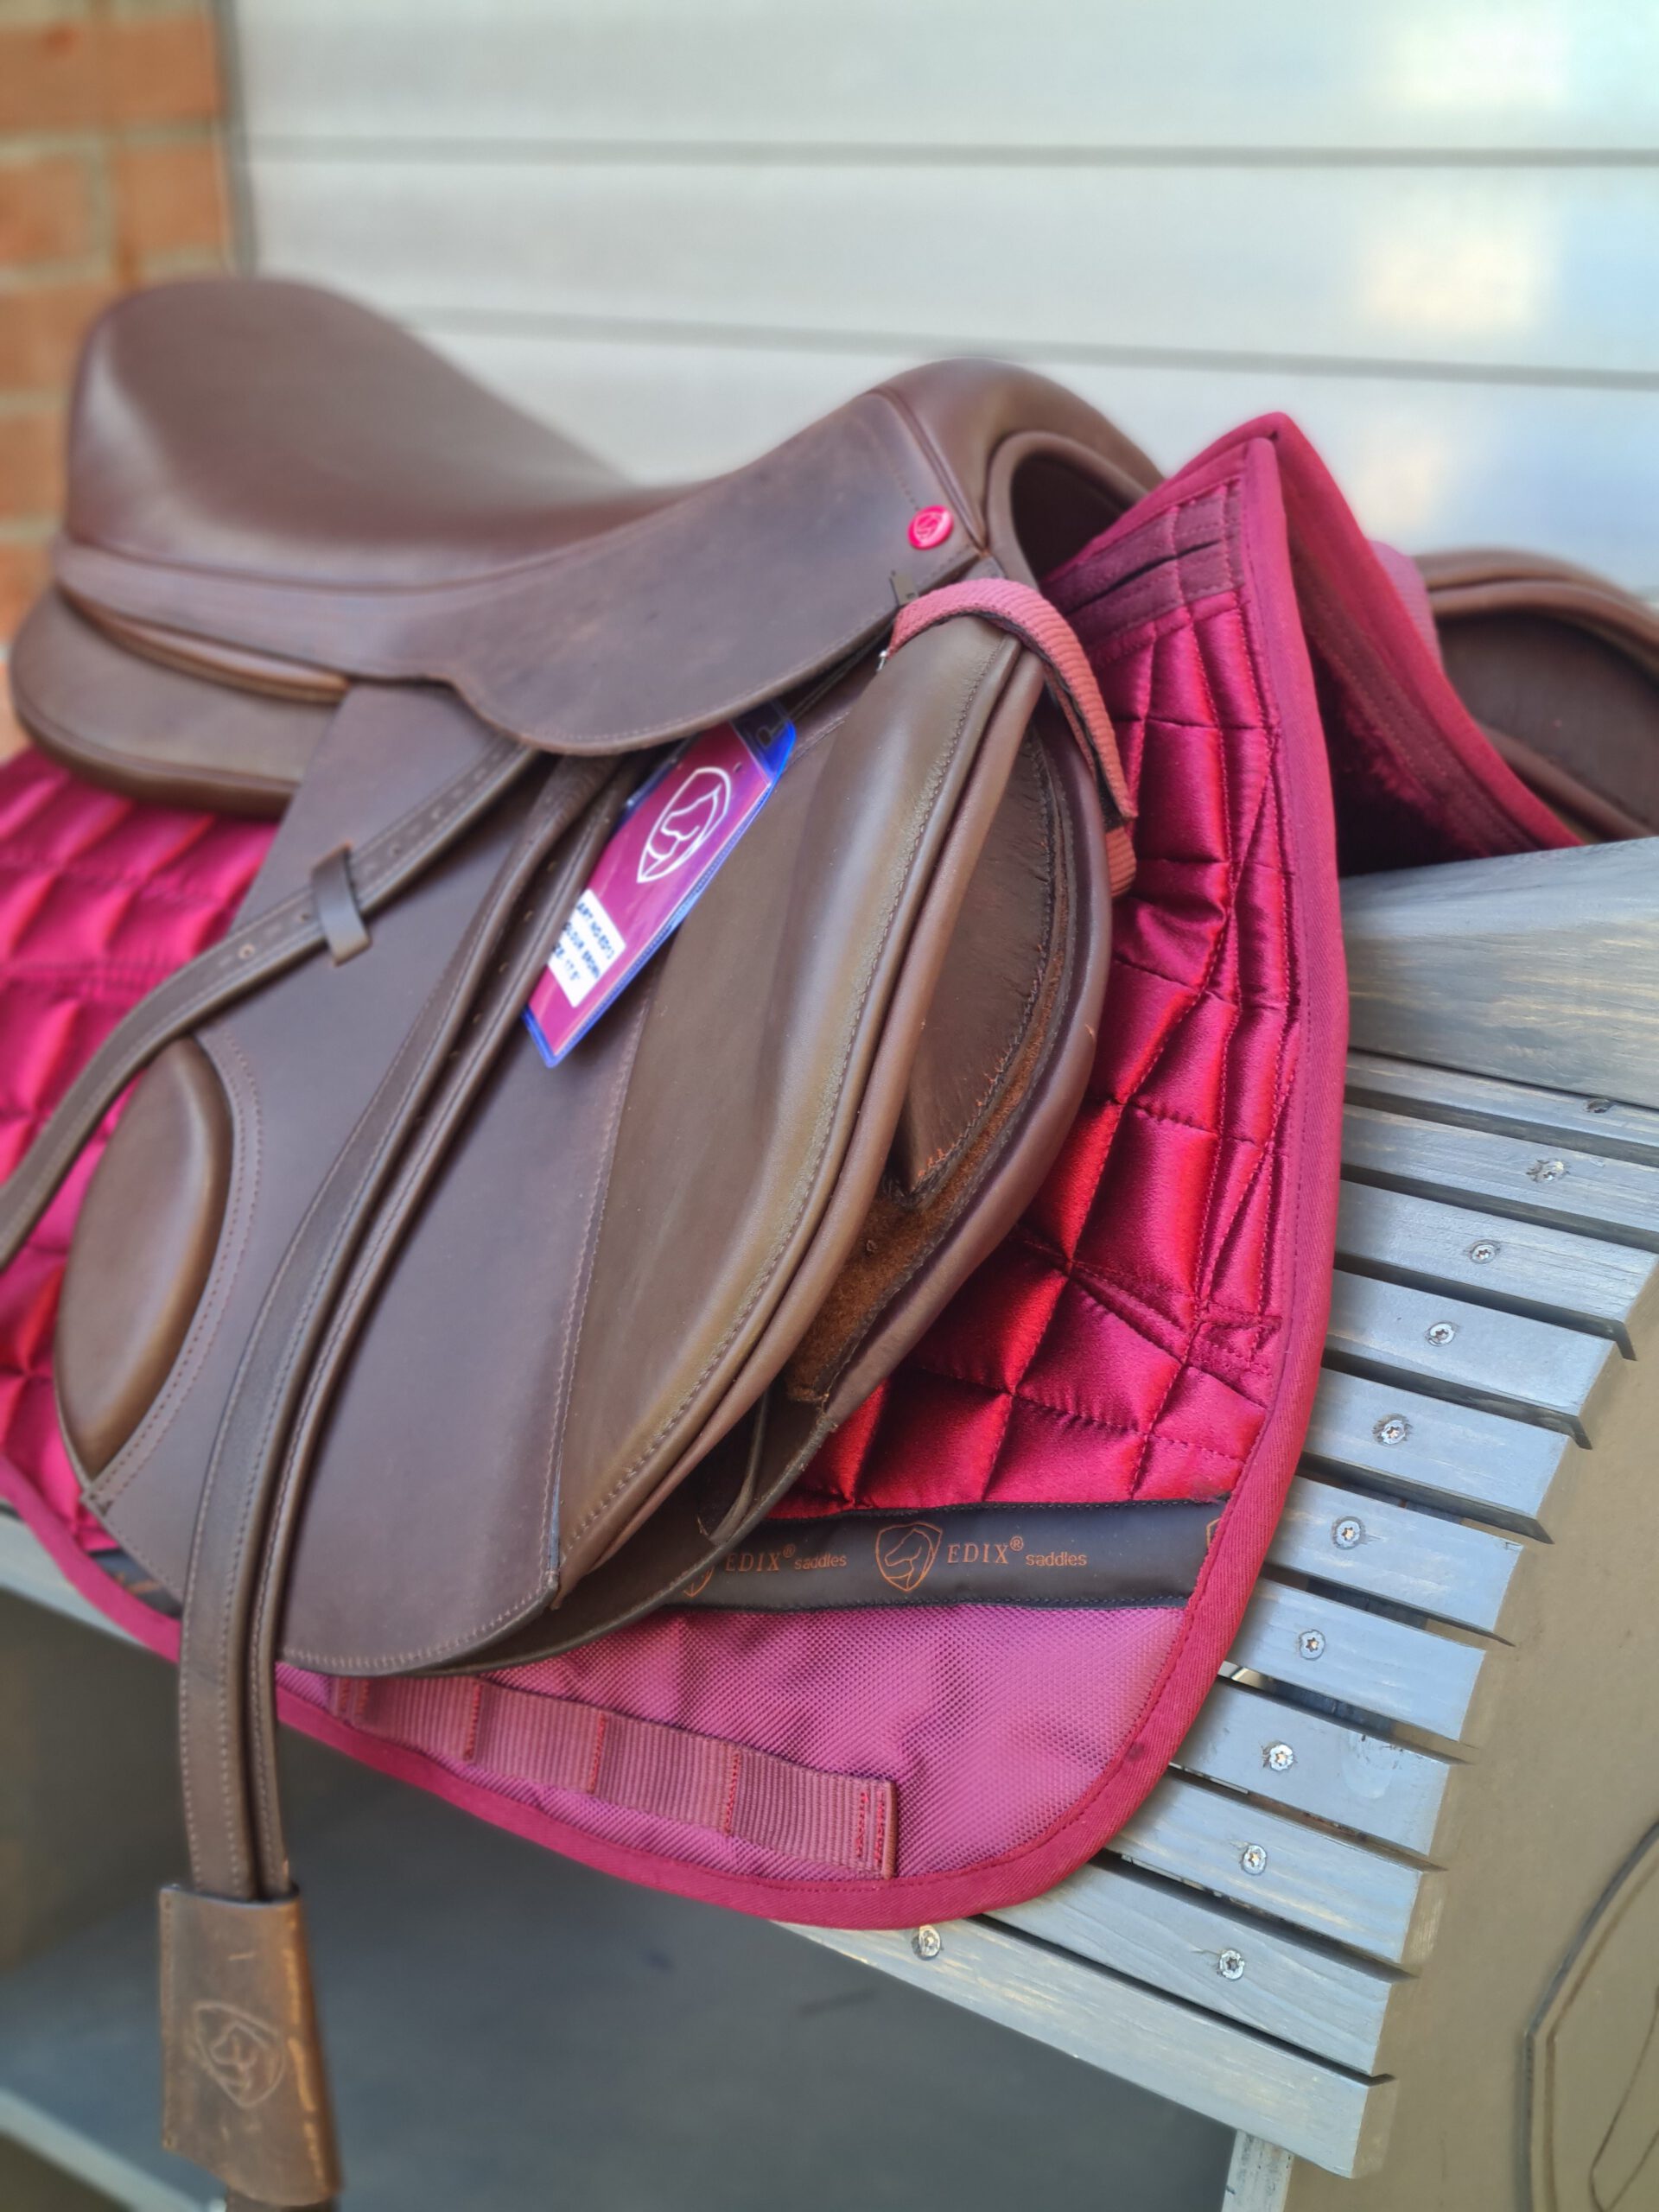 EDIX uni dressuur 8-pocket cotton saddle pad - EDIX Saddles